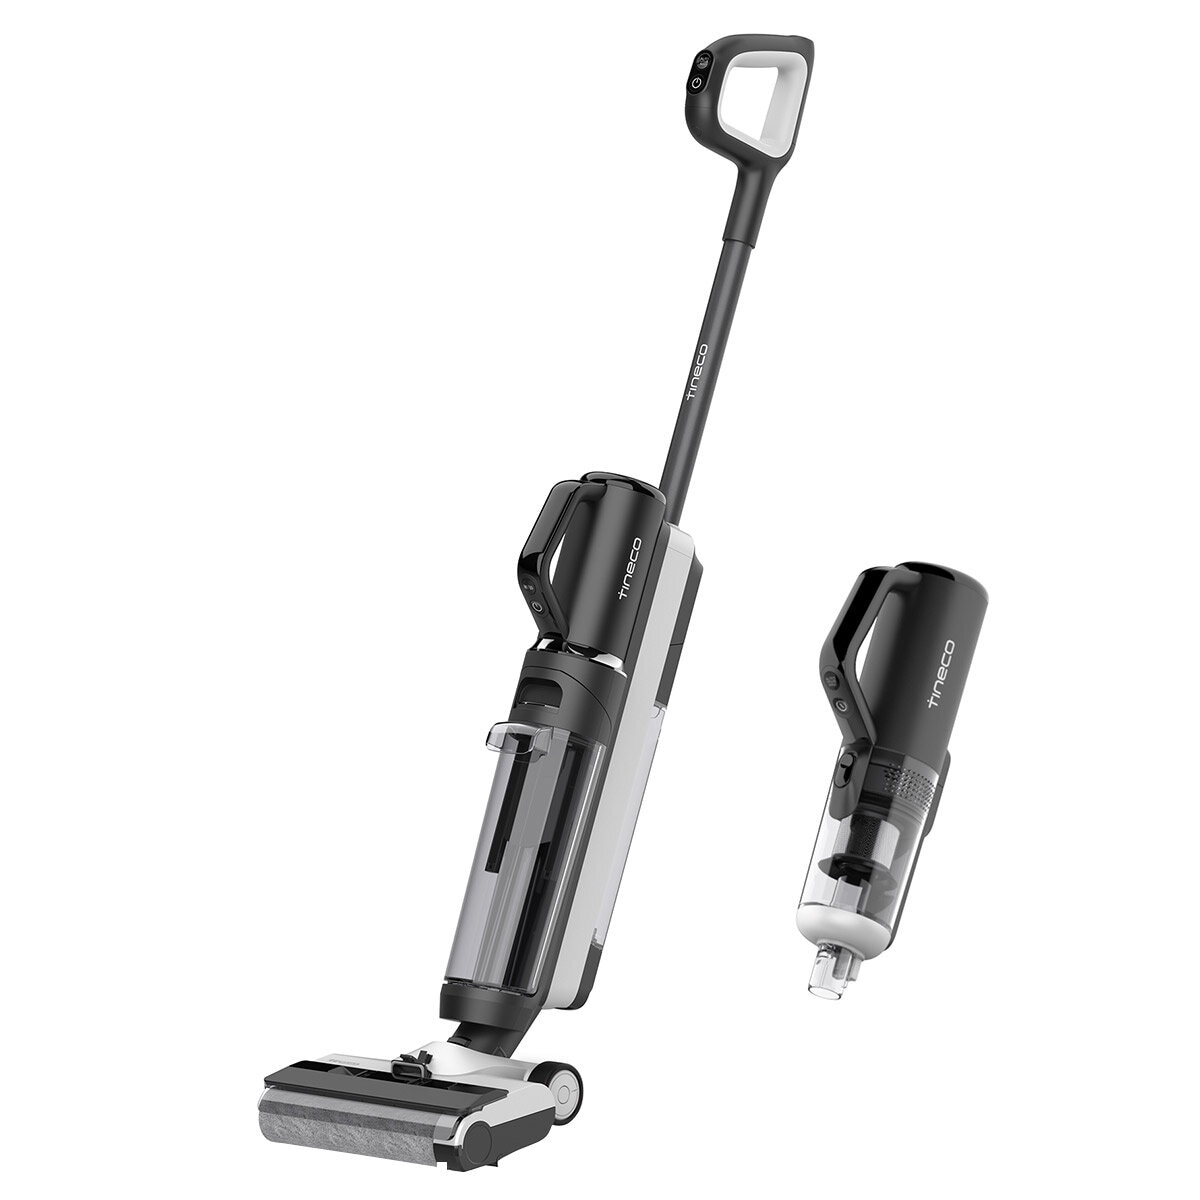 Introducing Tineco FLOOR ONE S5 COMBO Smart Wet Dry Vacuum Cleaner